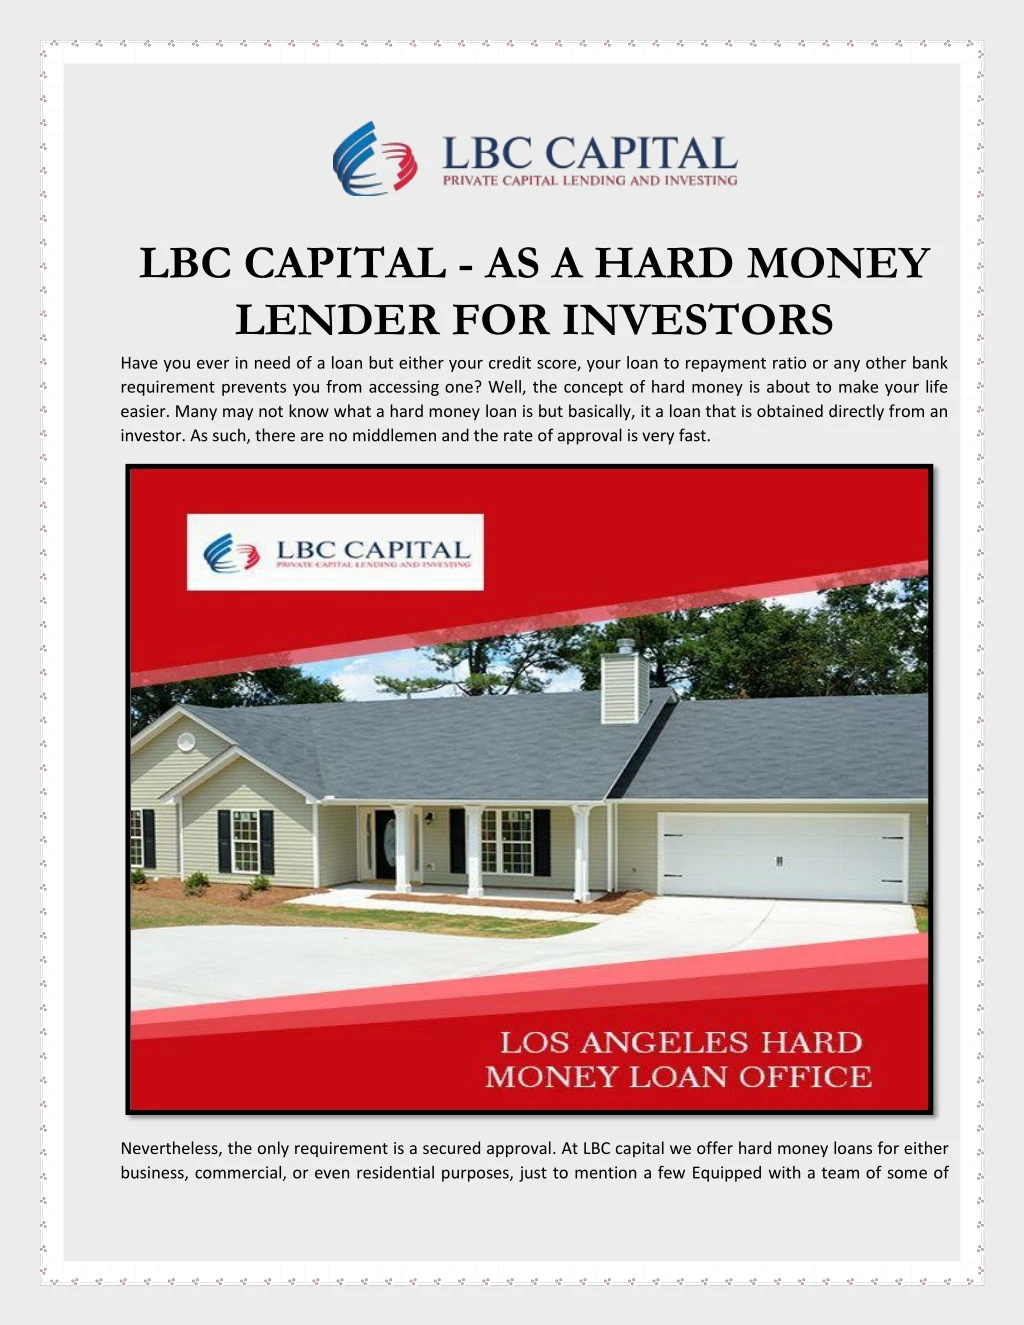 lbc capital as a hard money lender for investors